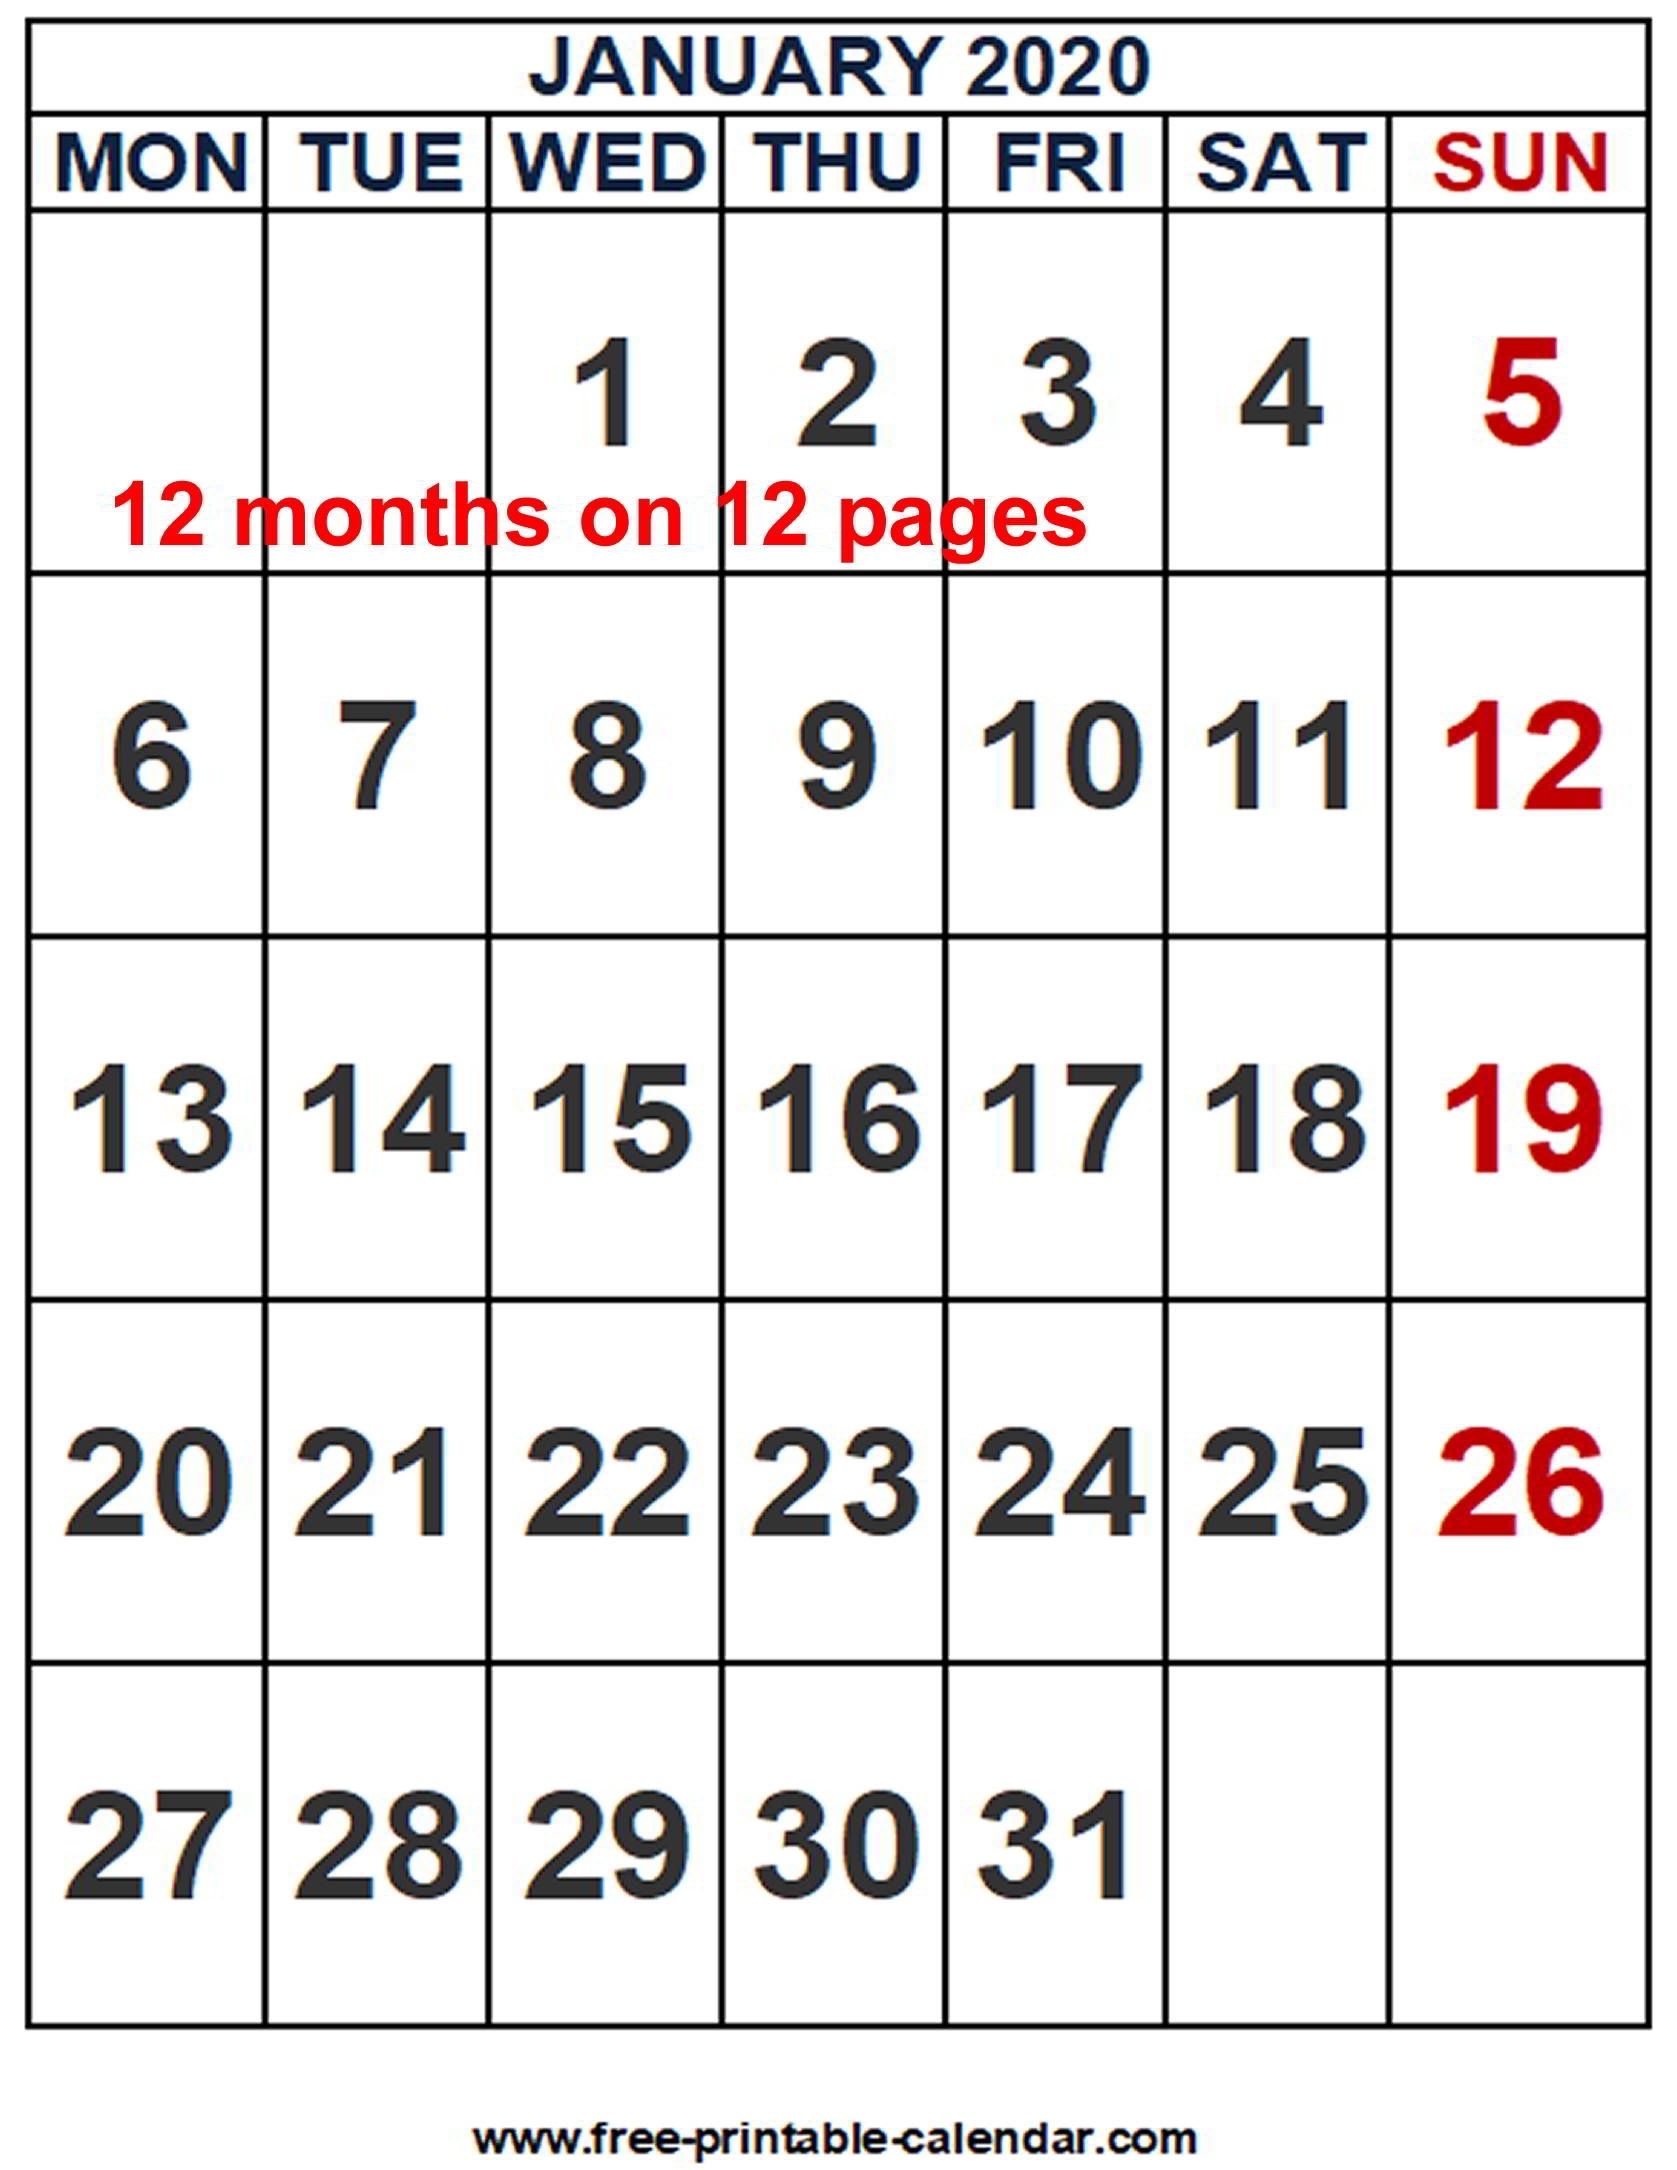 2020 Calendar Word Template - Free-Printable-Calendar Incredible Microsoft Word Calendar 2020 Template